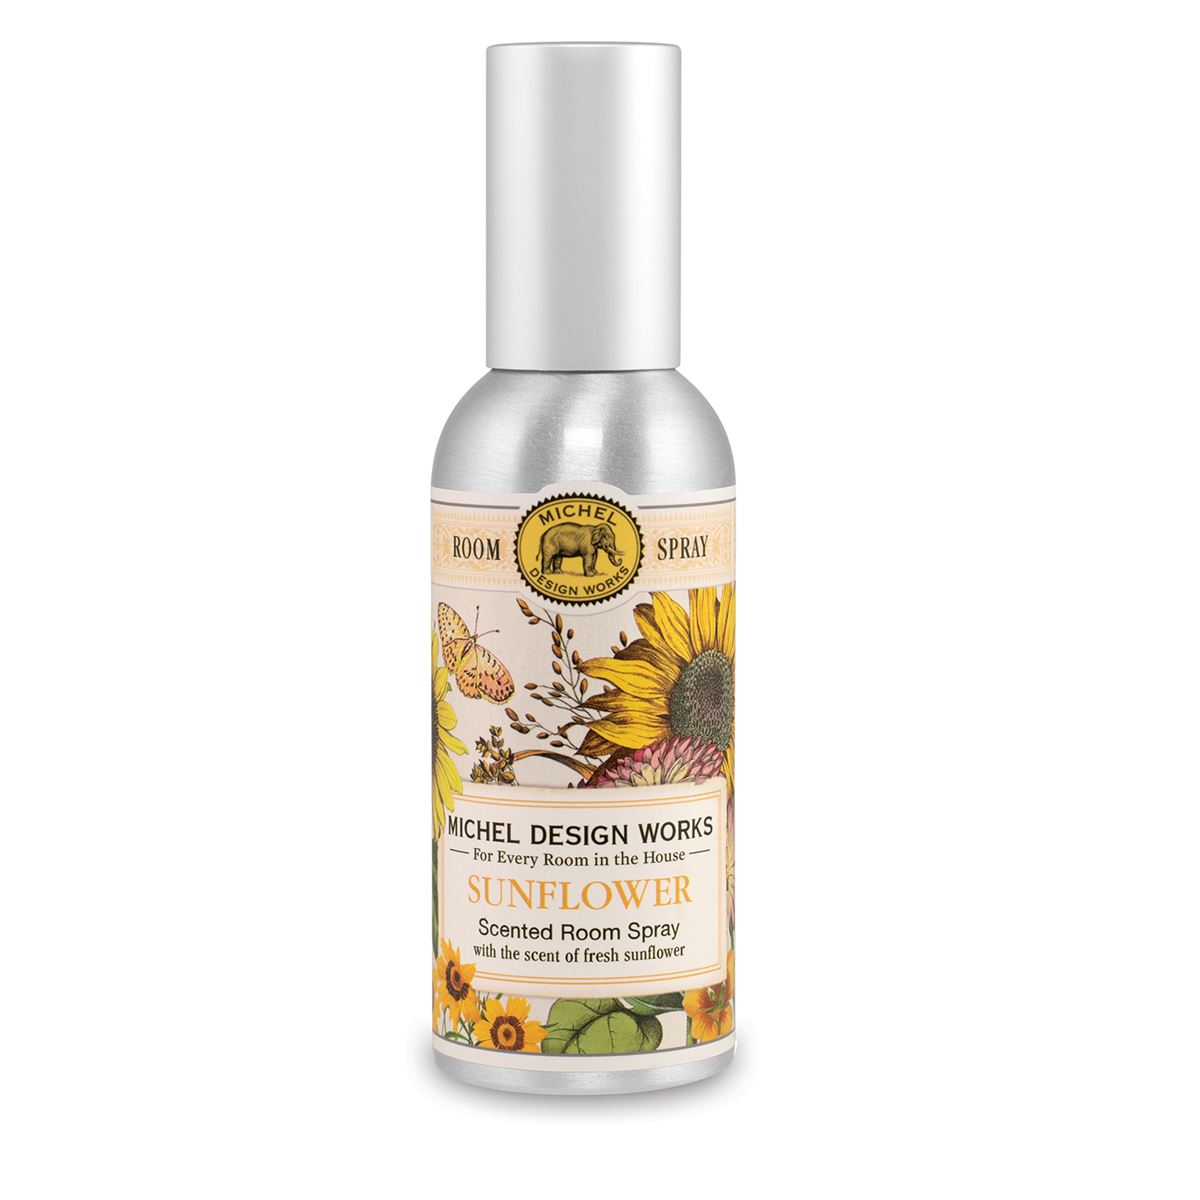 Sunflower home fragrance spray